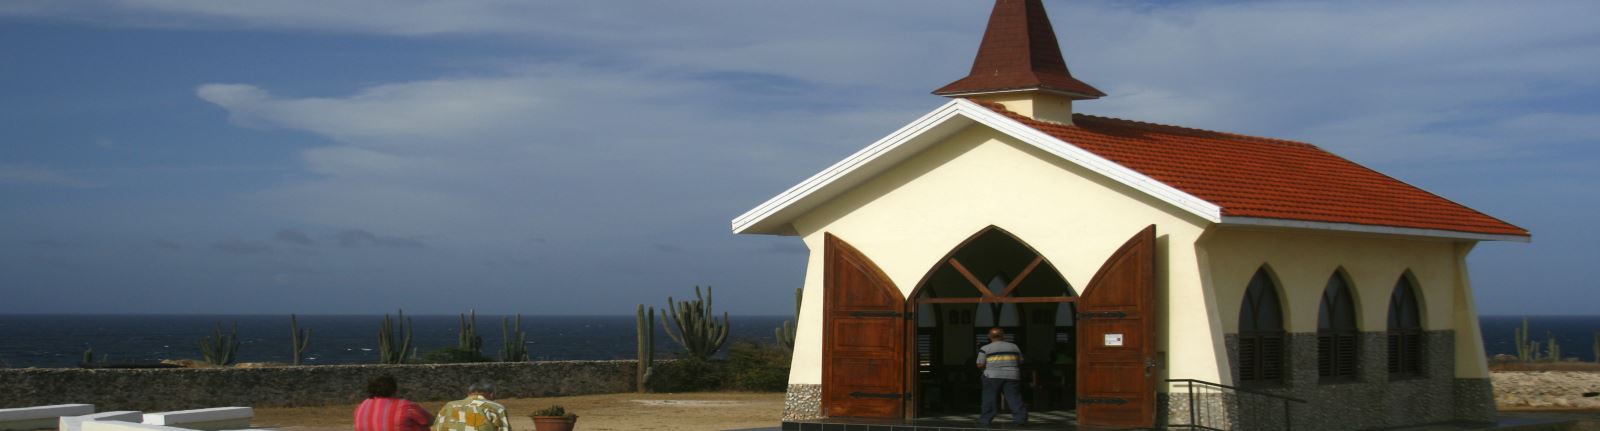 Aruba Weddings church